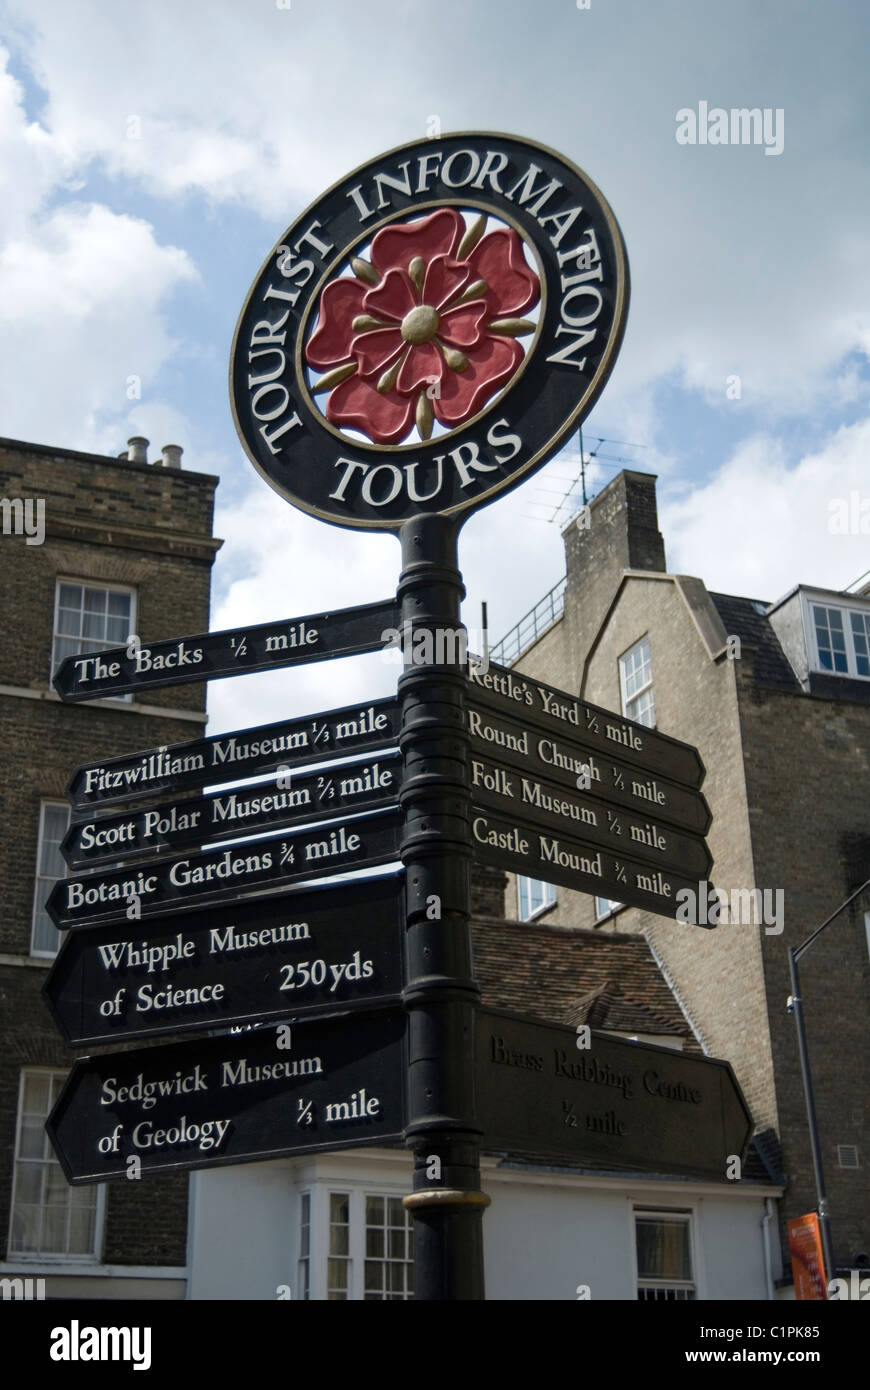 England, Cambridge, touristische Hinweisschilder Stockfoto